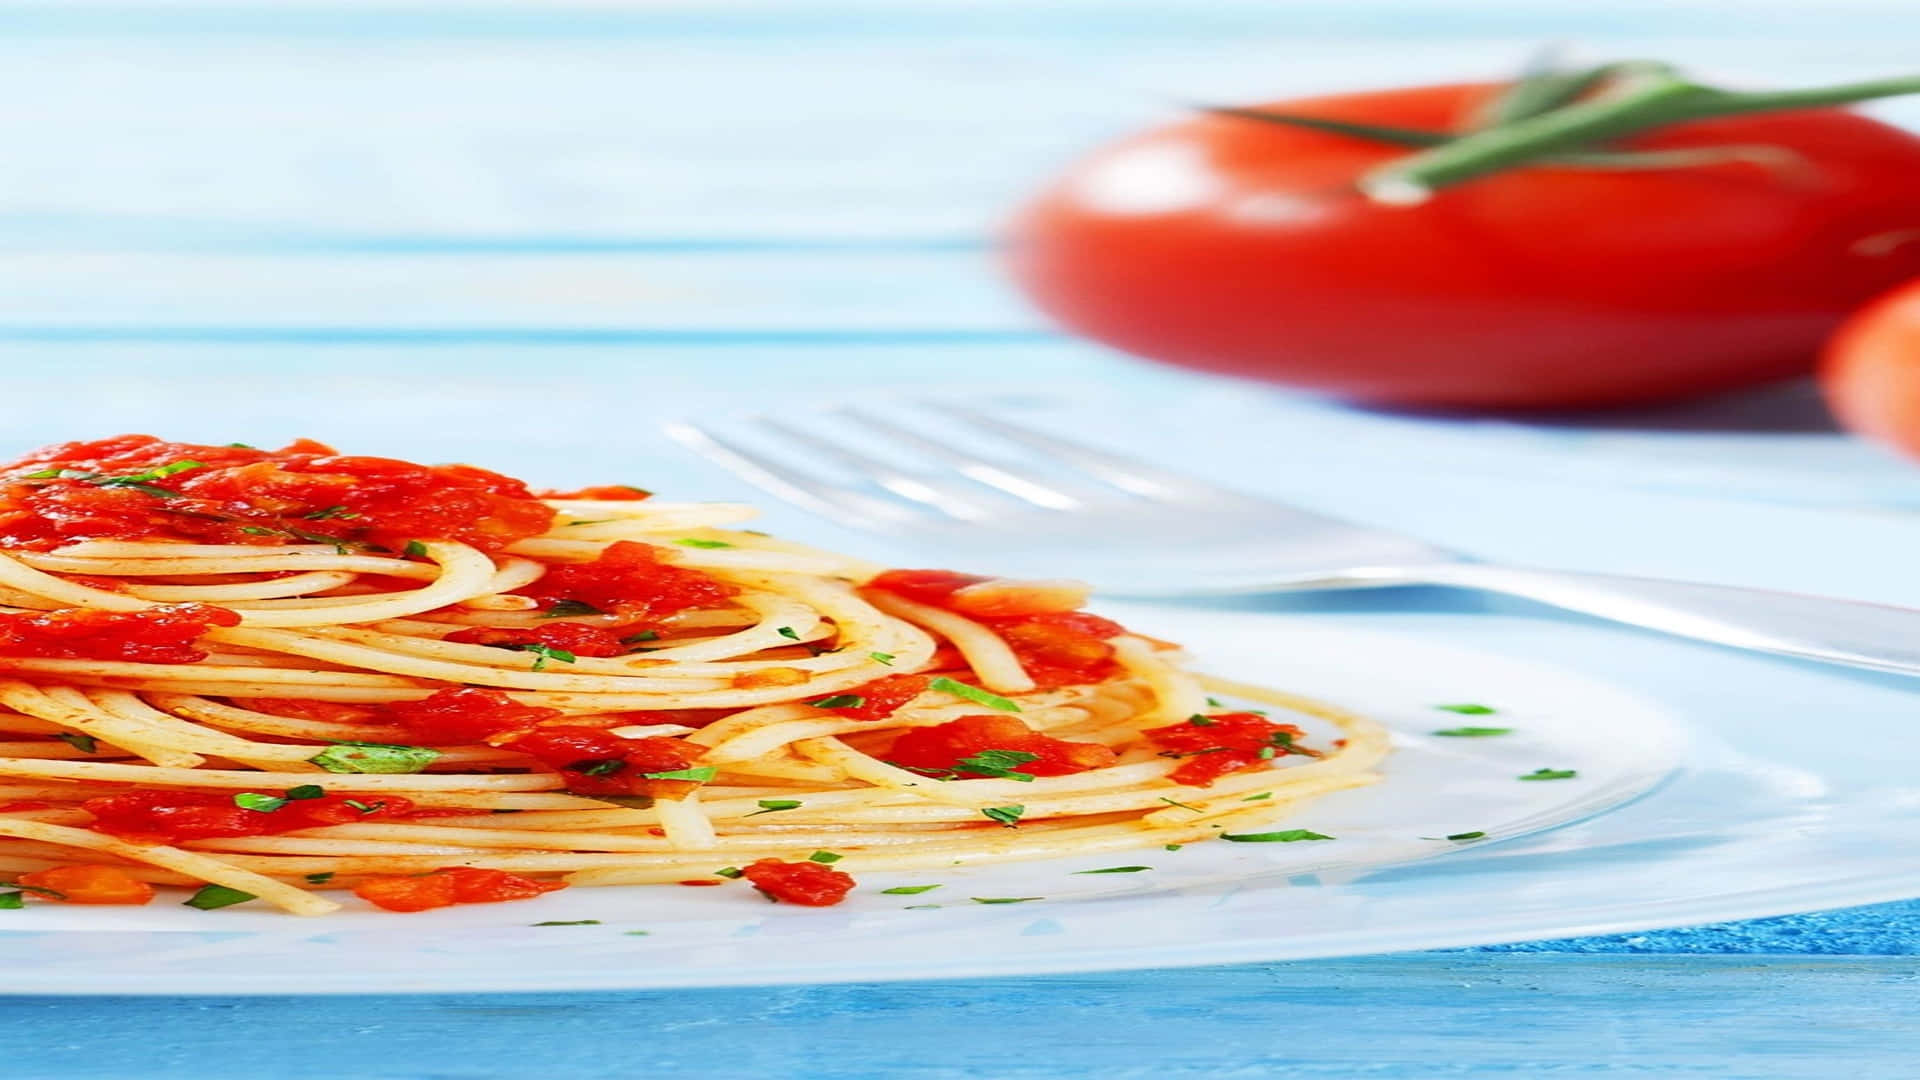 Fresh Tomato Basil Spaghetti 1920x1080 Pasta Background